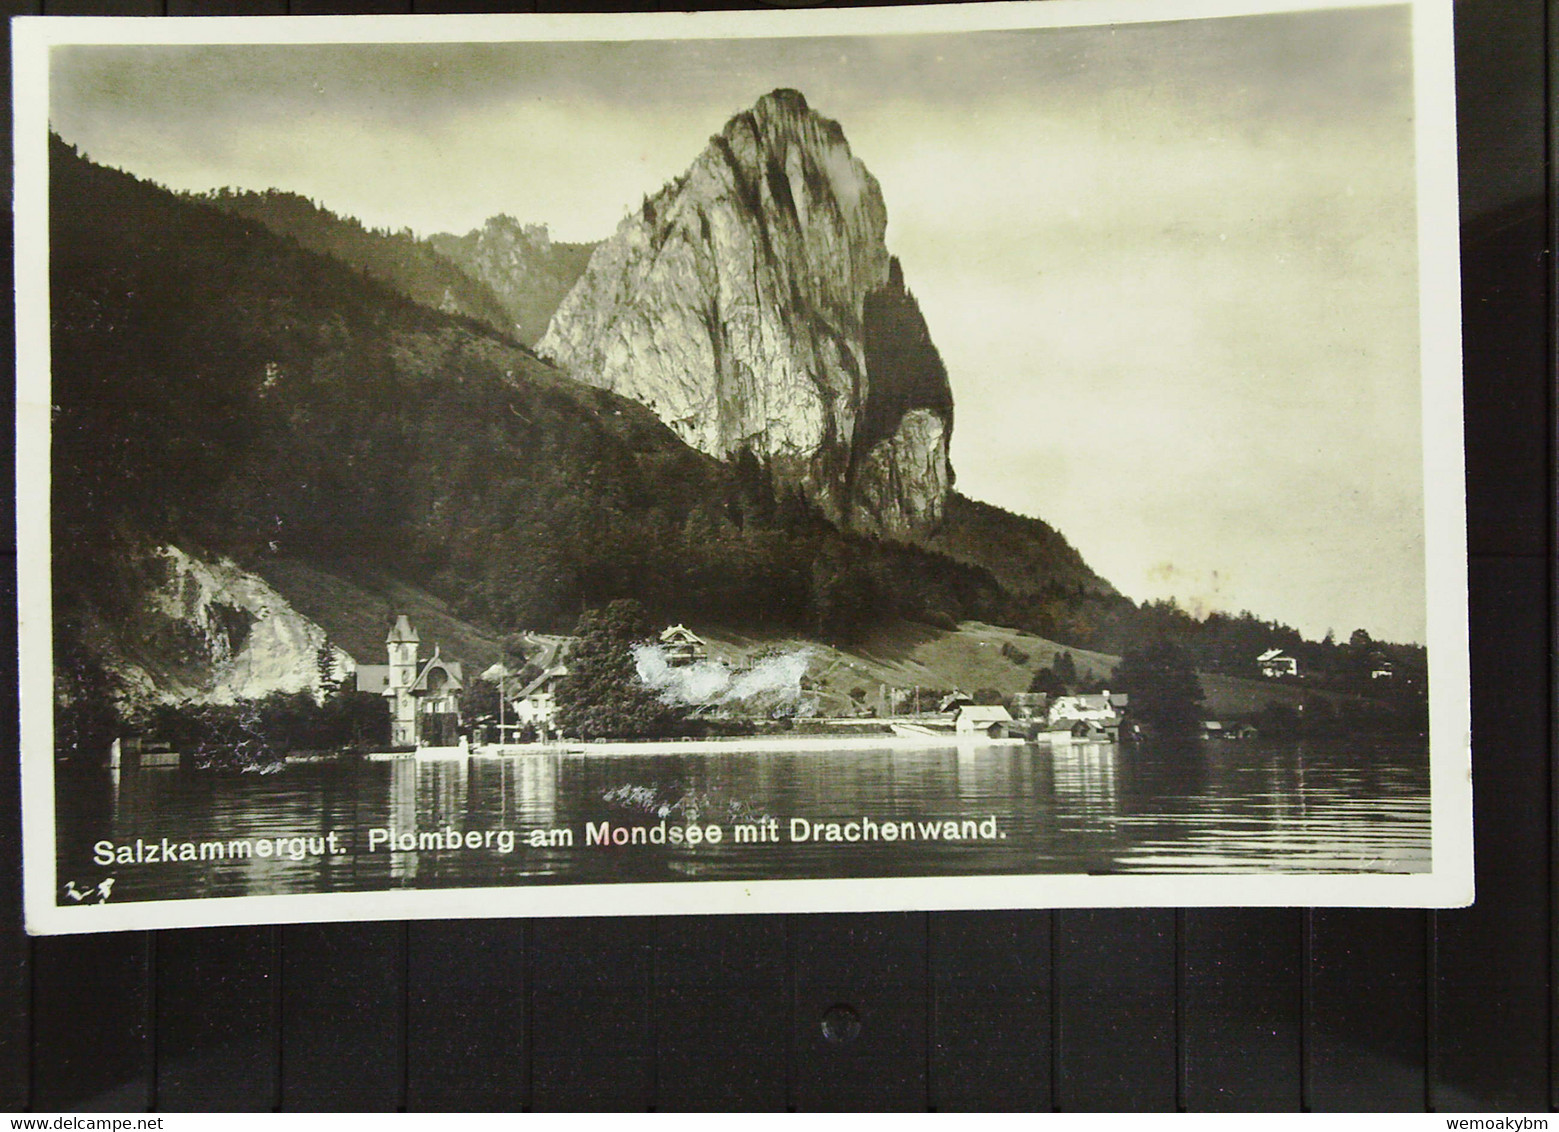 Österreich: Ansichtskarte Vom Salzkammergut Plomberg Am Mondsee V. 26.6.34 Mit 24 Gr Hohensalzbg. U. 1 Gr Knr: 504, 447 - Vöcklabruck